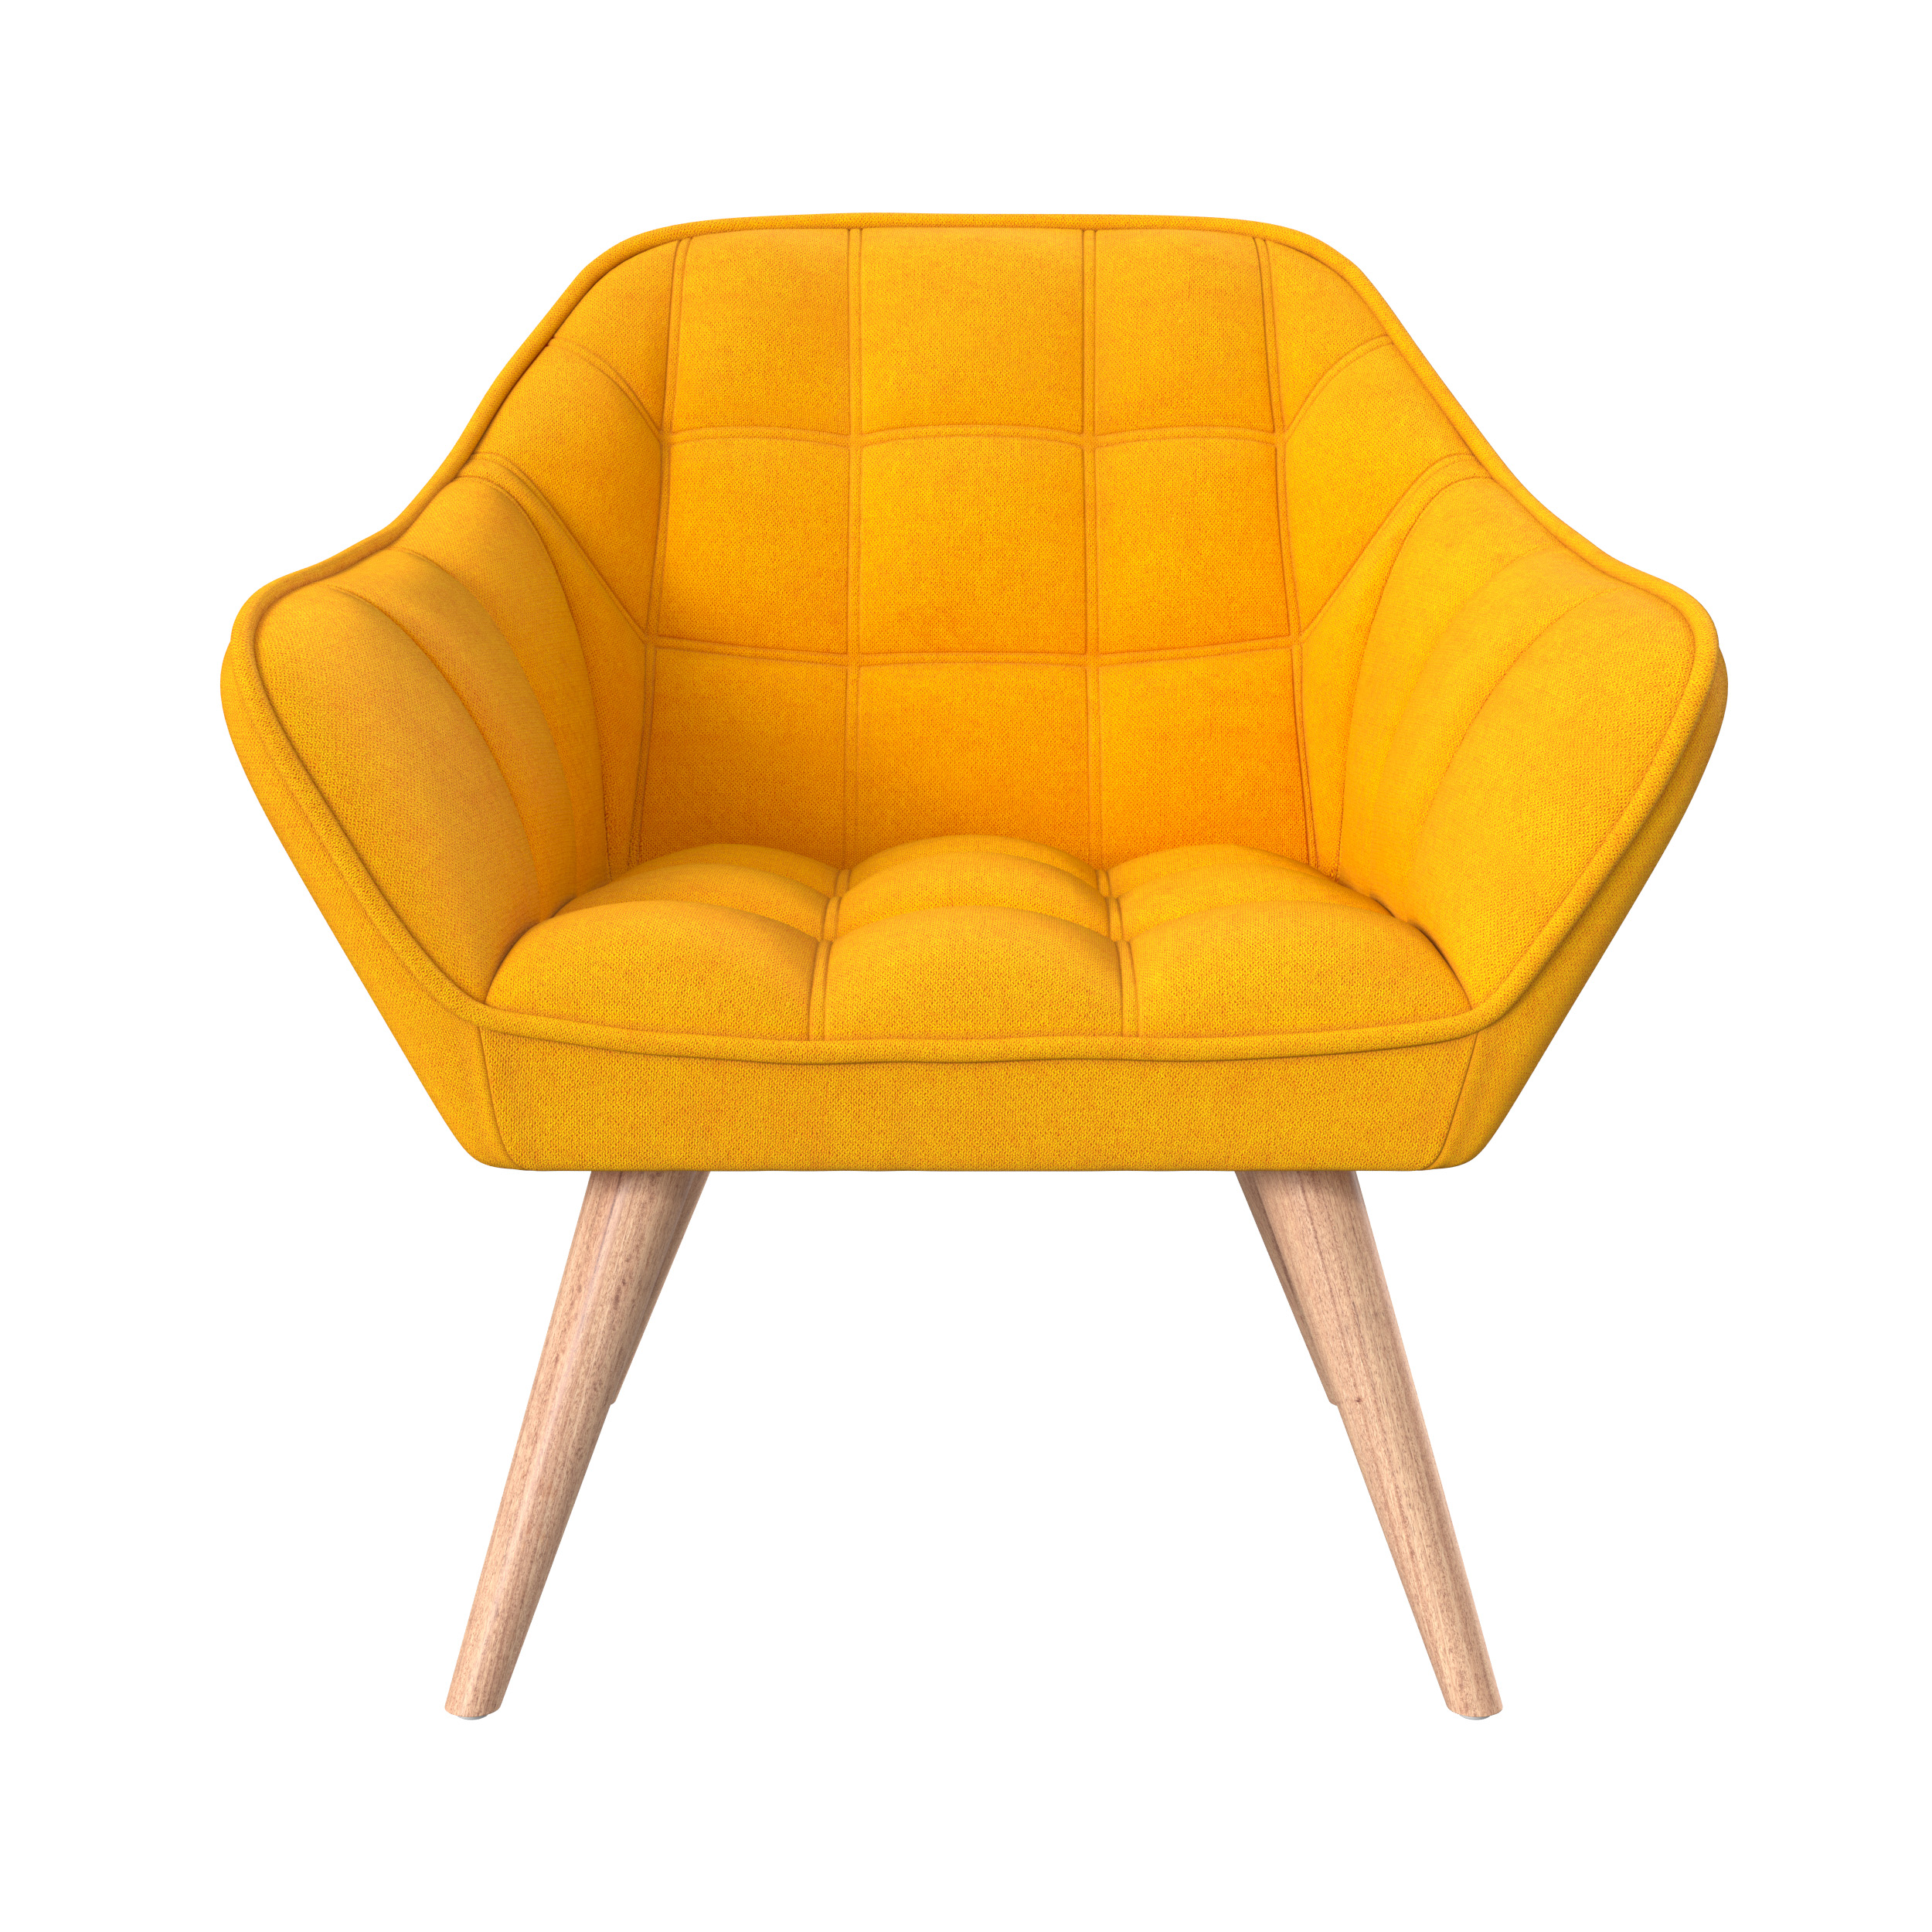 fauteuil en tissu jaune avec accoudoirs